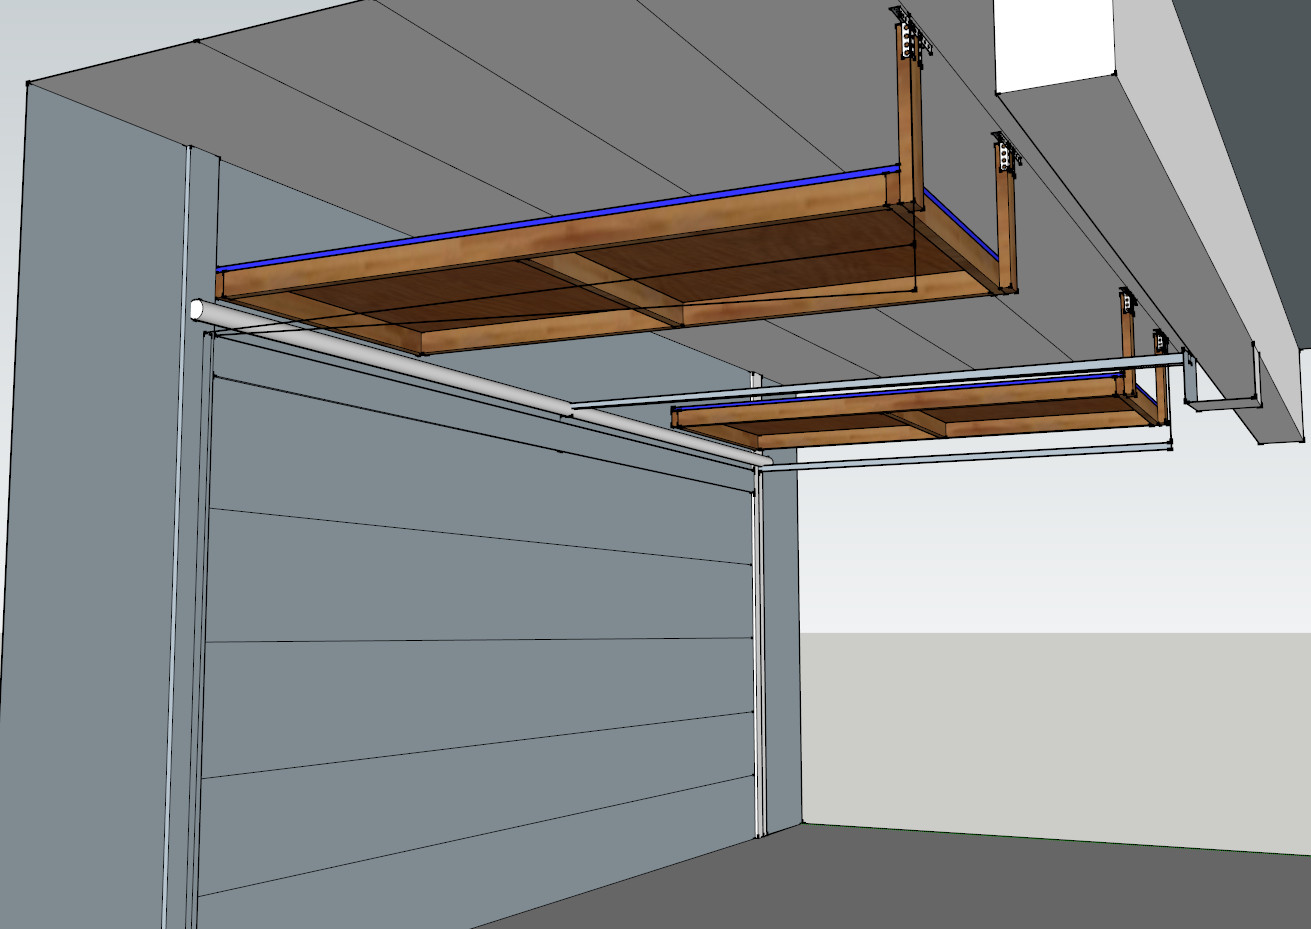 Best ideas about Over Garage Door Storage
. Save or Pin Garage Door Storage Project DIY QuickCrafter Now.